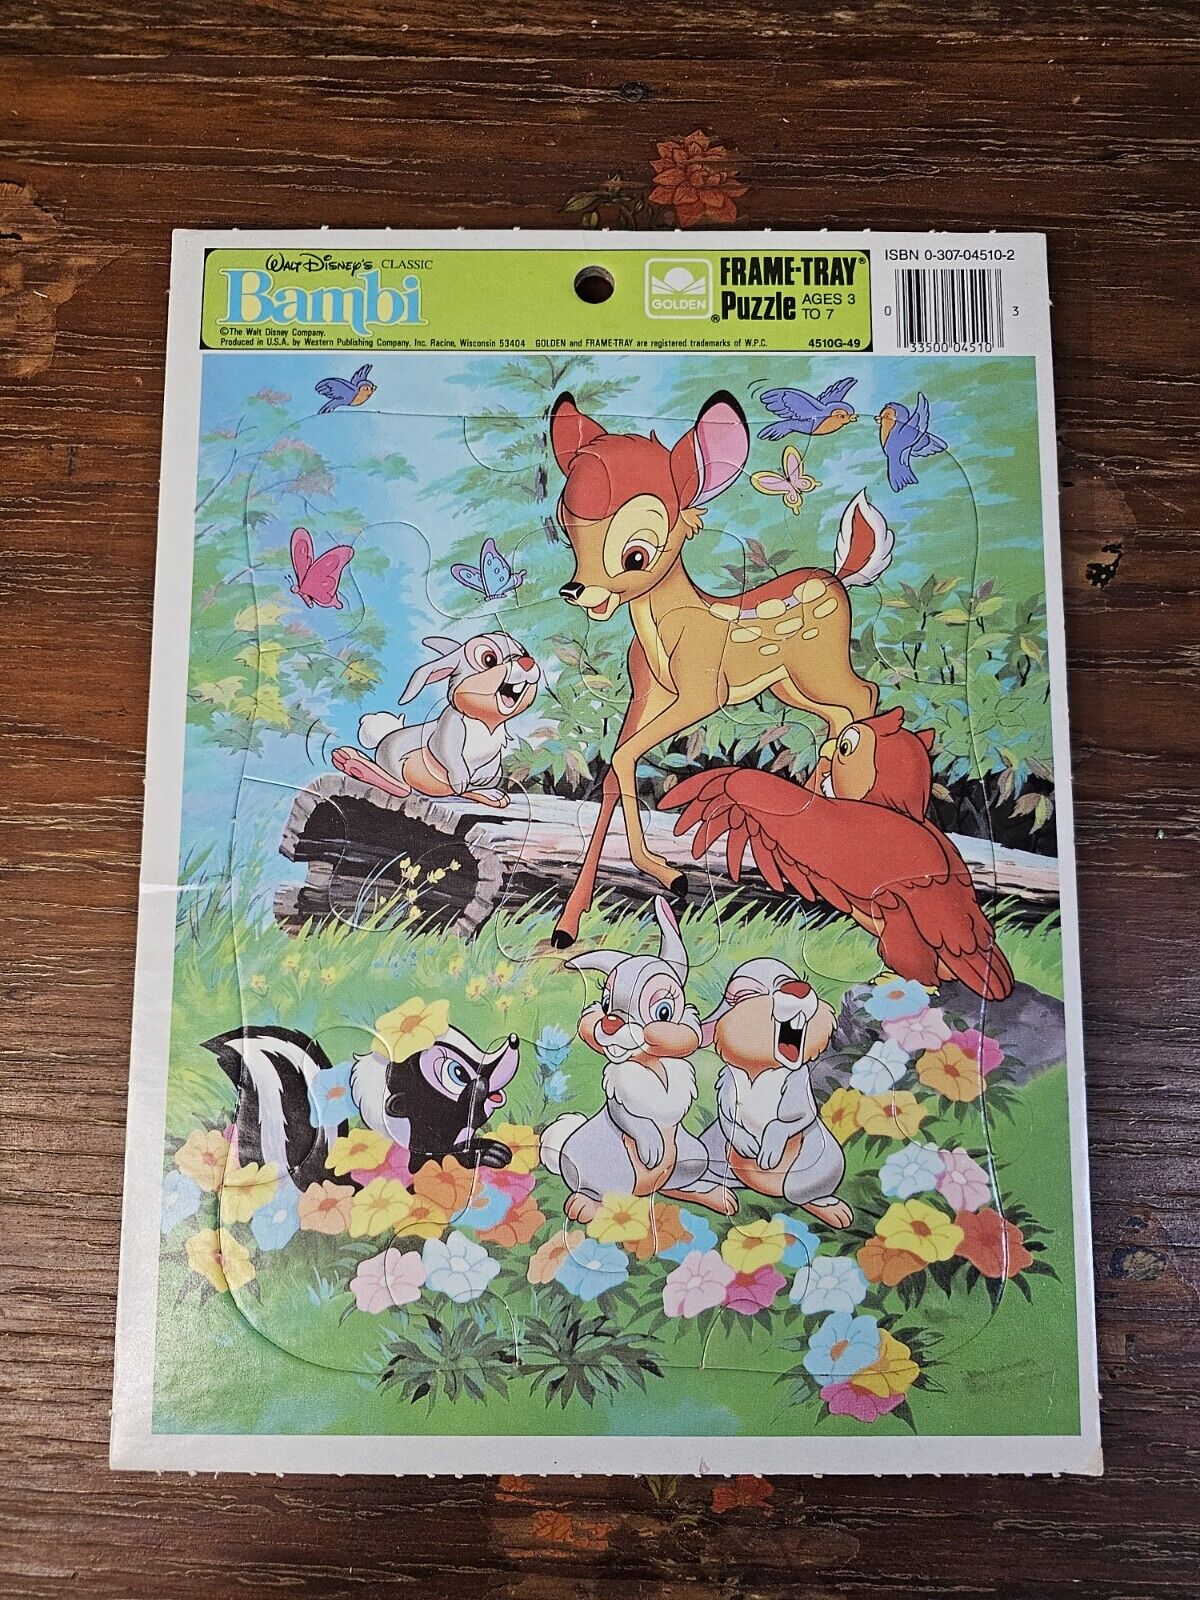 Vintage 1980s Walt Disney’s Classics Bambi Frame Tray Puzzle